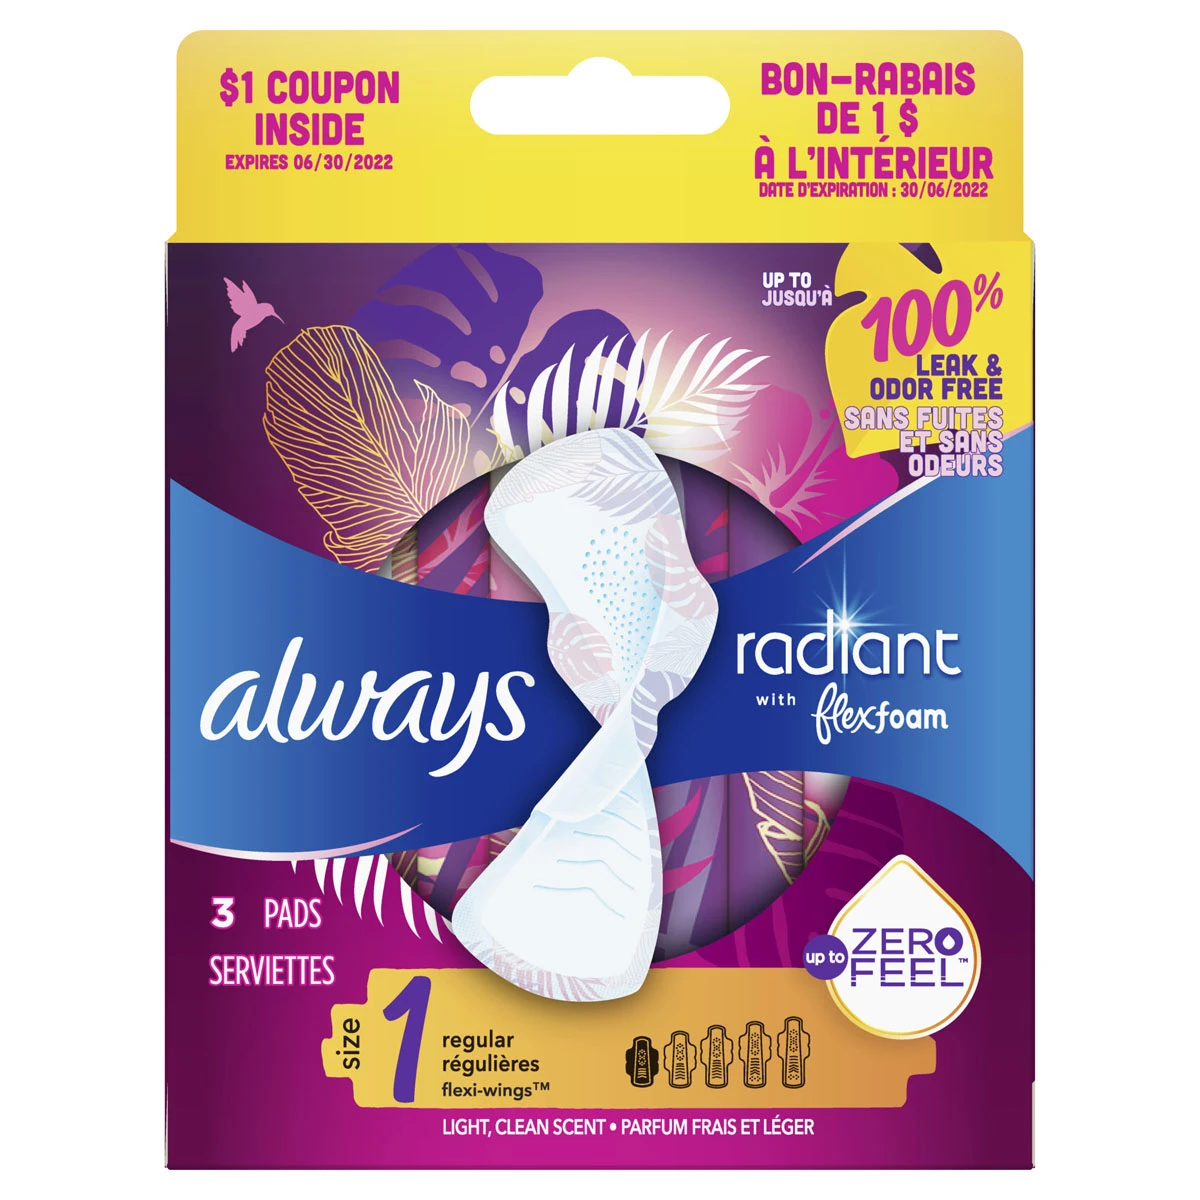 Always-Radiant-FlexFoam-Pads-for-Women-Size-1-ct-3